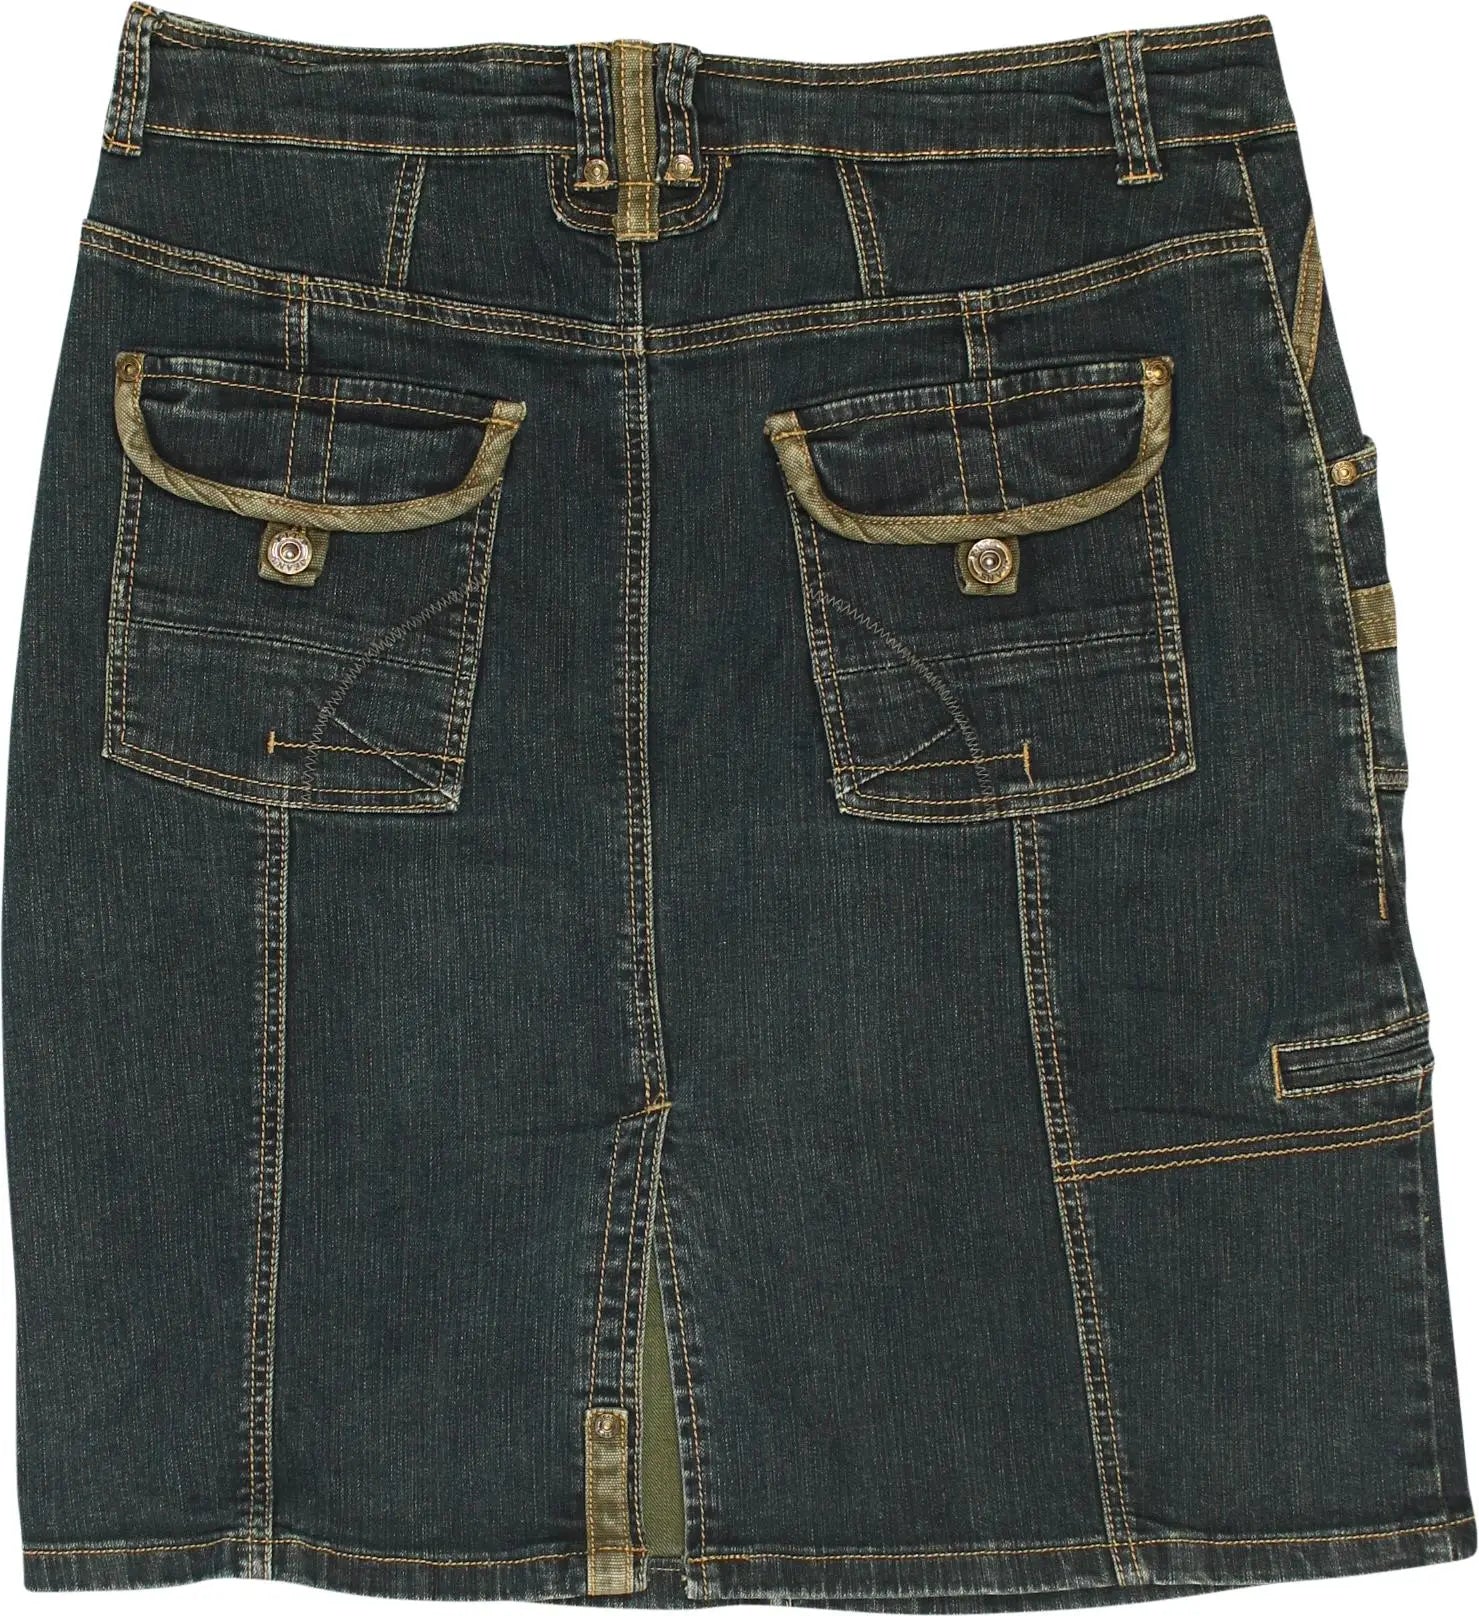 Miss Etam - Denim Midi Skirt- ThriftTale.com - Vintage and second handclothing